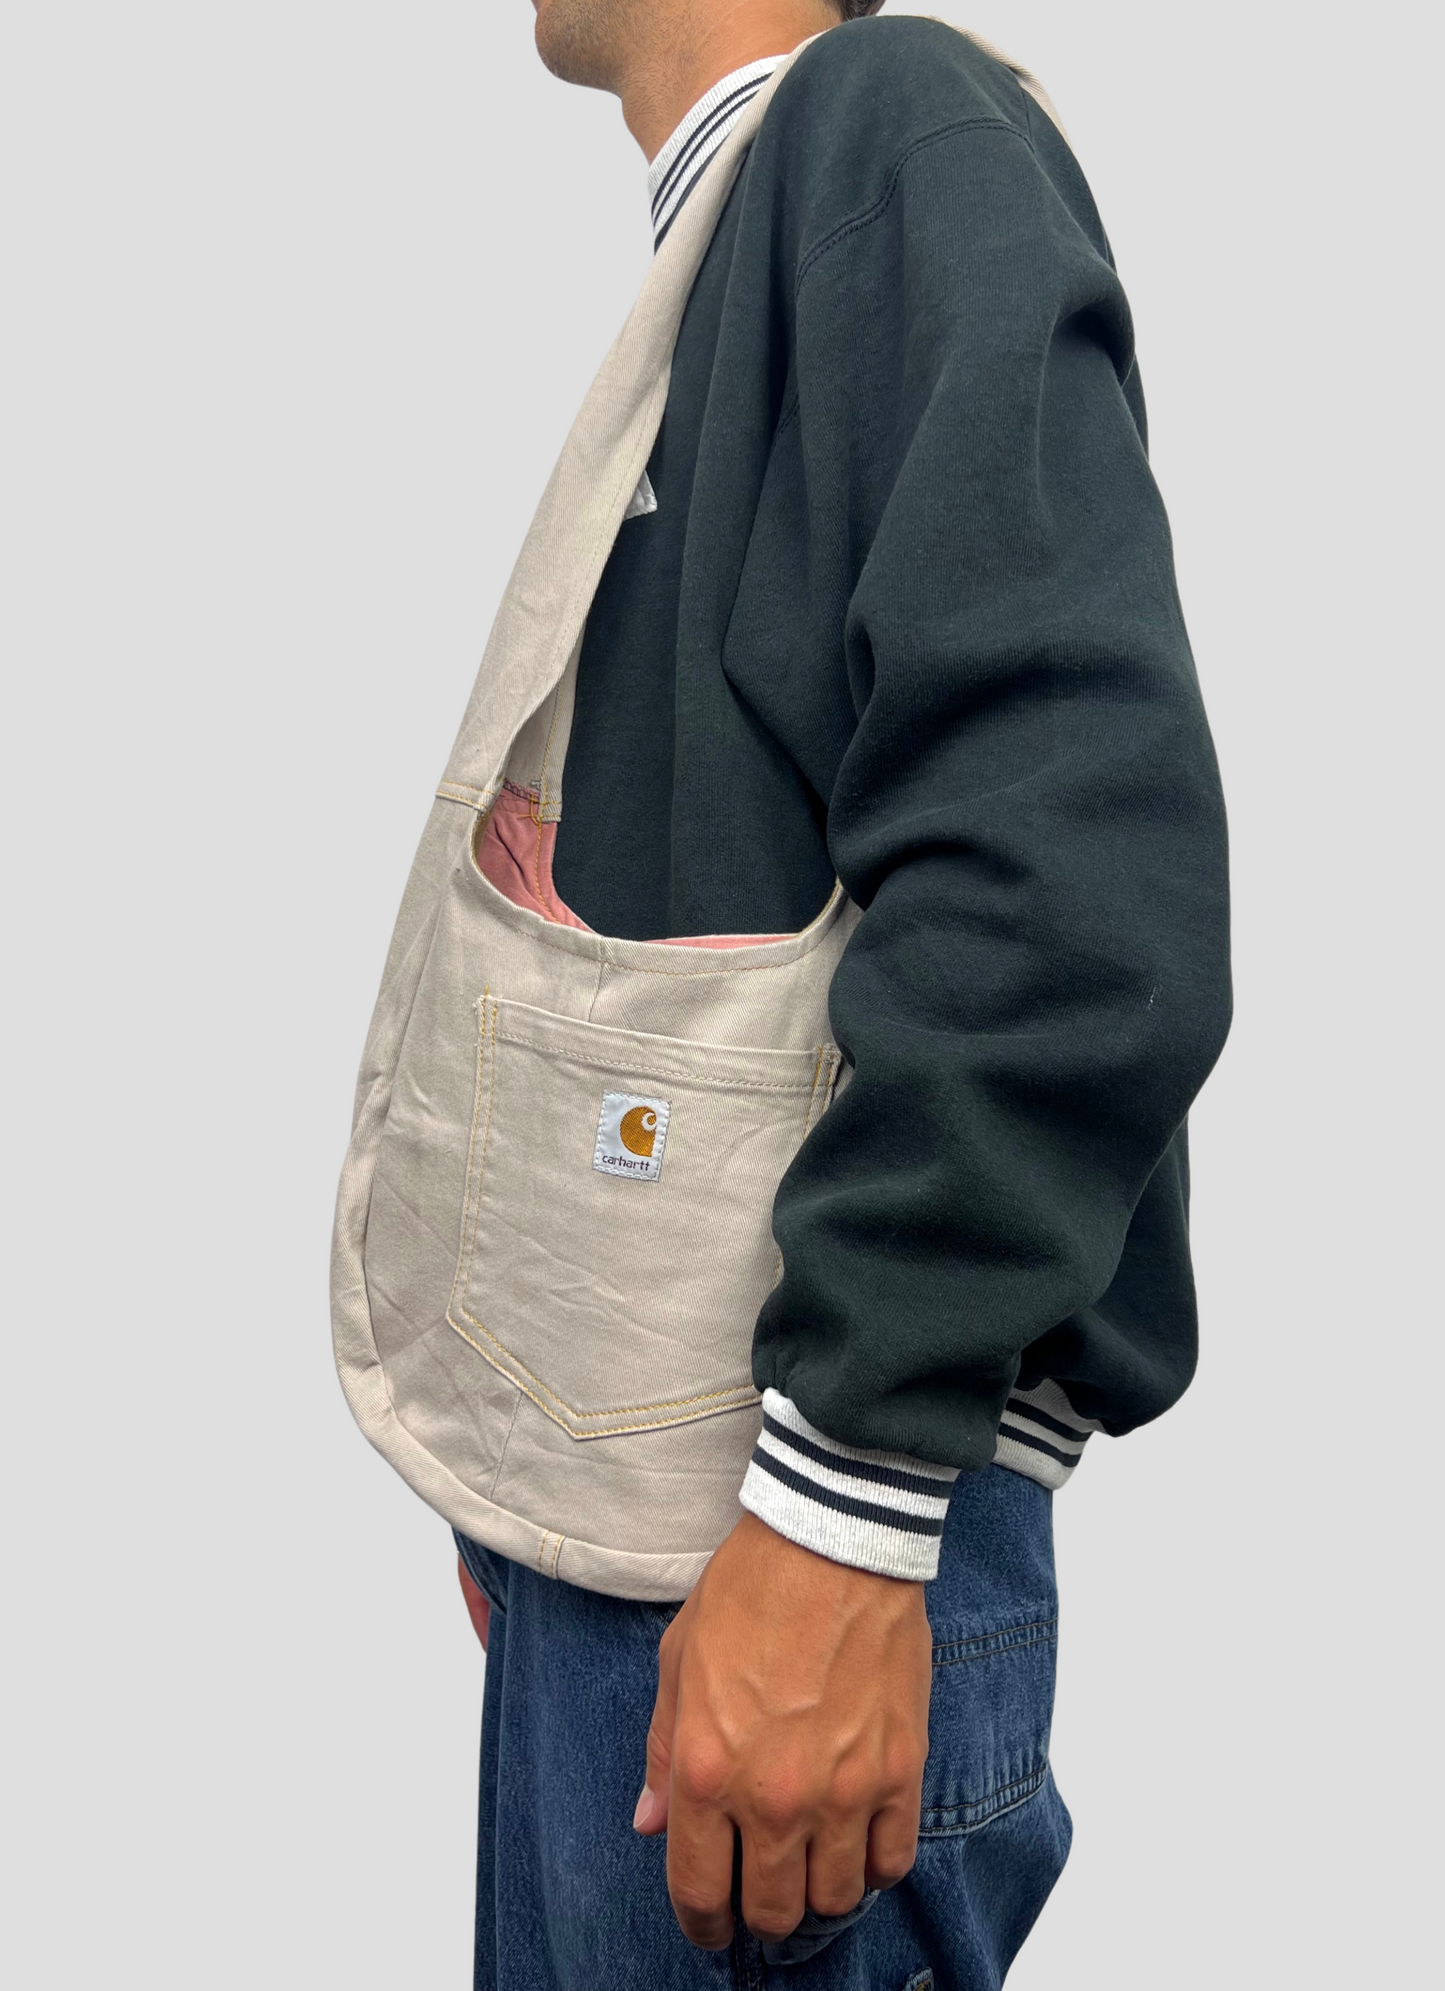 Reworked Carhartt Bags